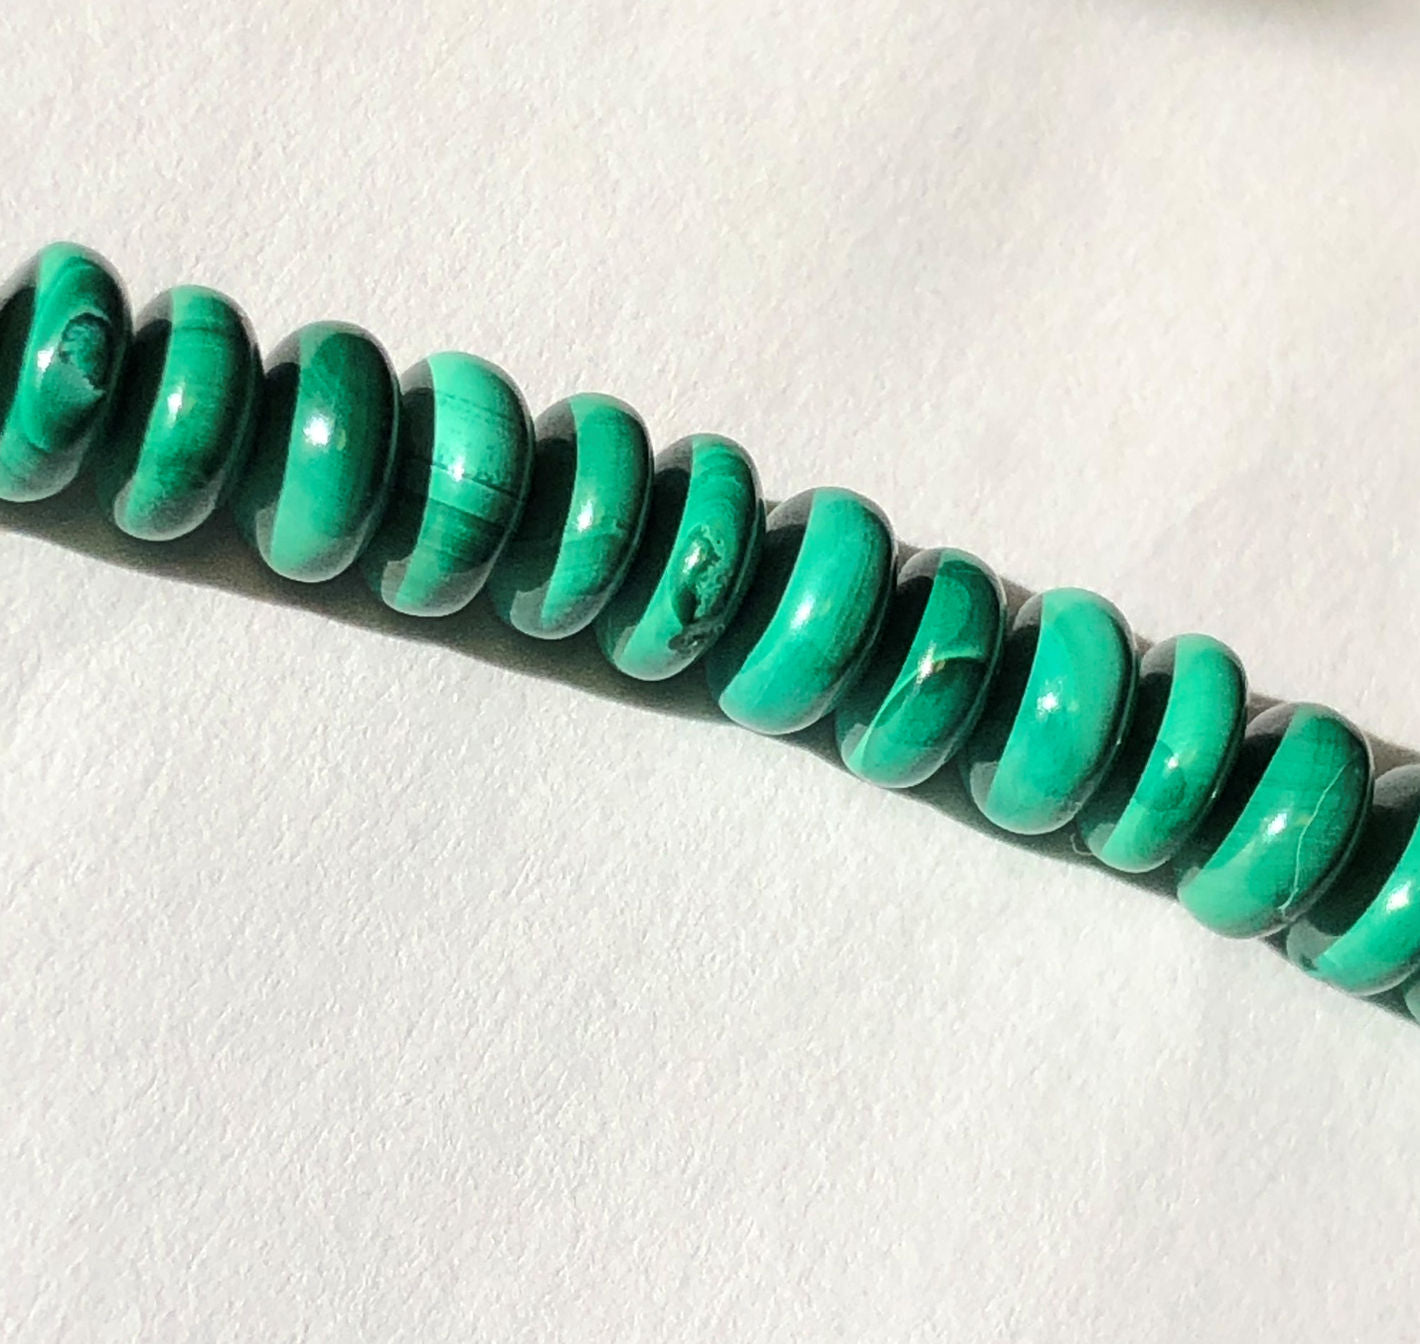 Natural Malachite 6 x 3 mm Rondelle Beads (B, C), 16-Inch Strand - 123 Beads